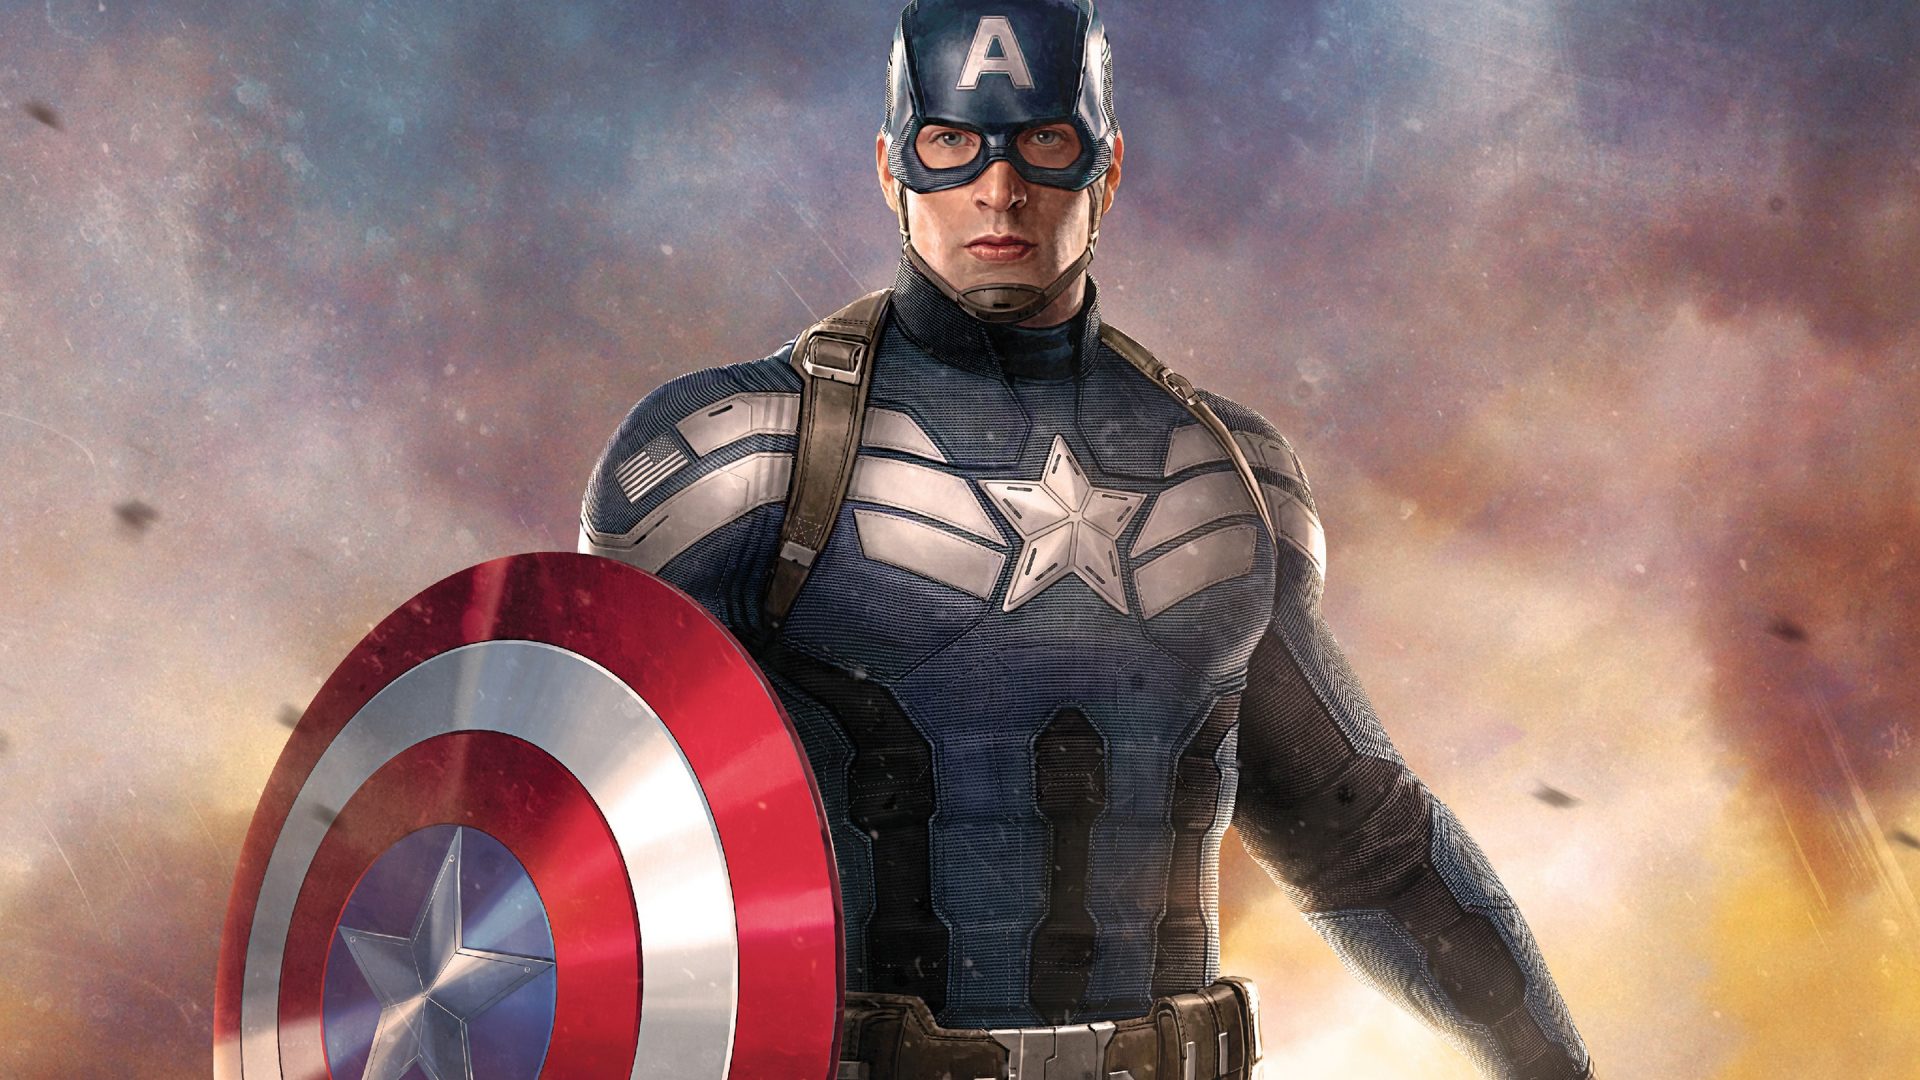 captain america hd wallpaper for mobile,superhero,fictional character,captain america,movie,hero